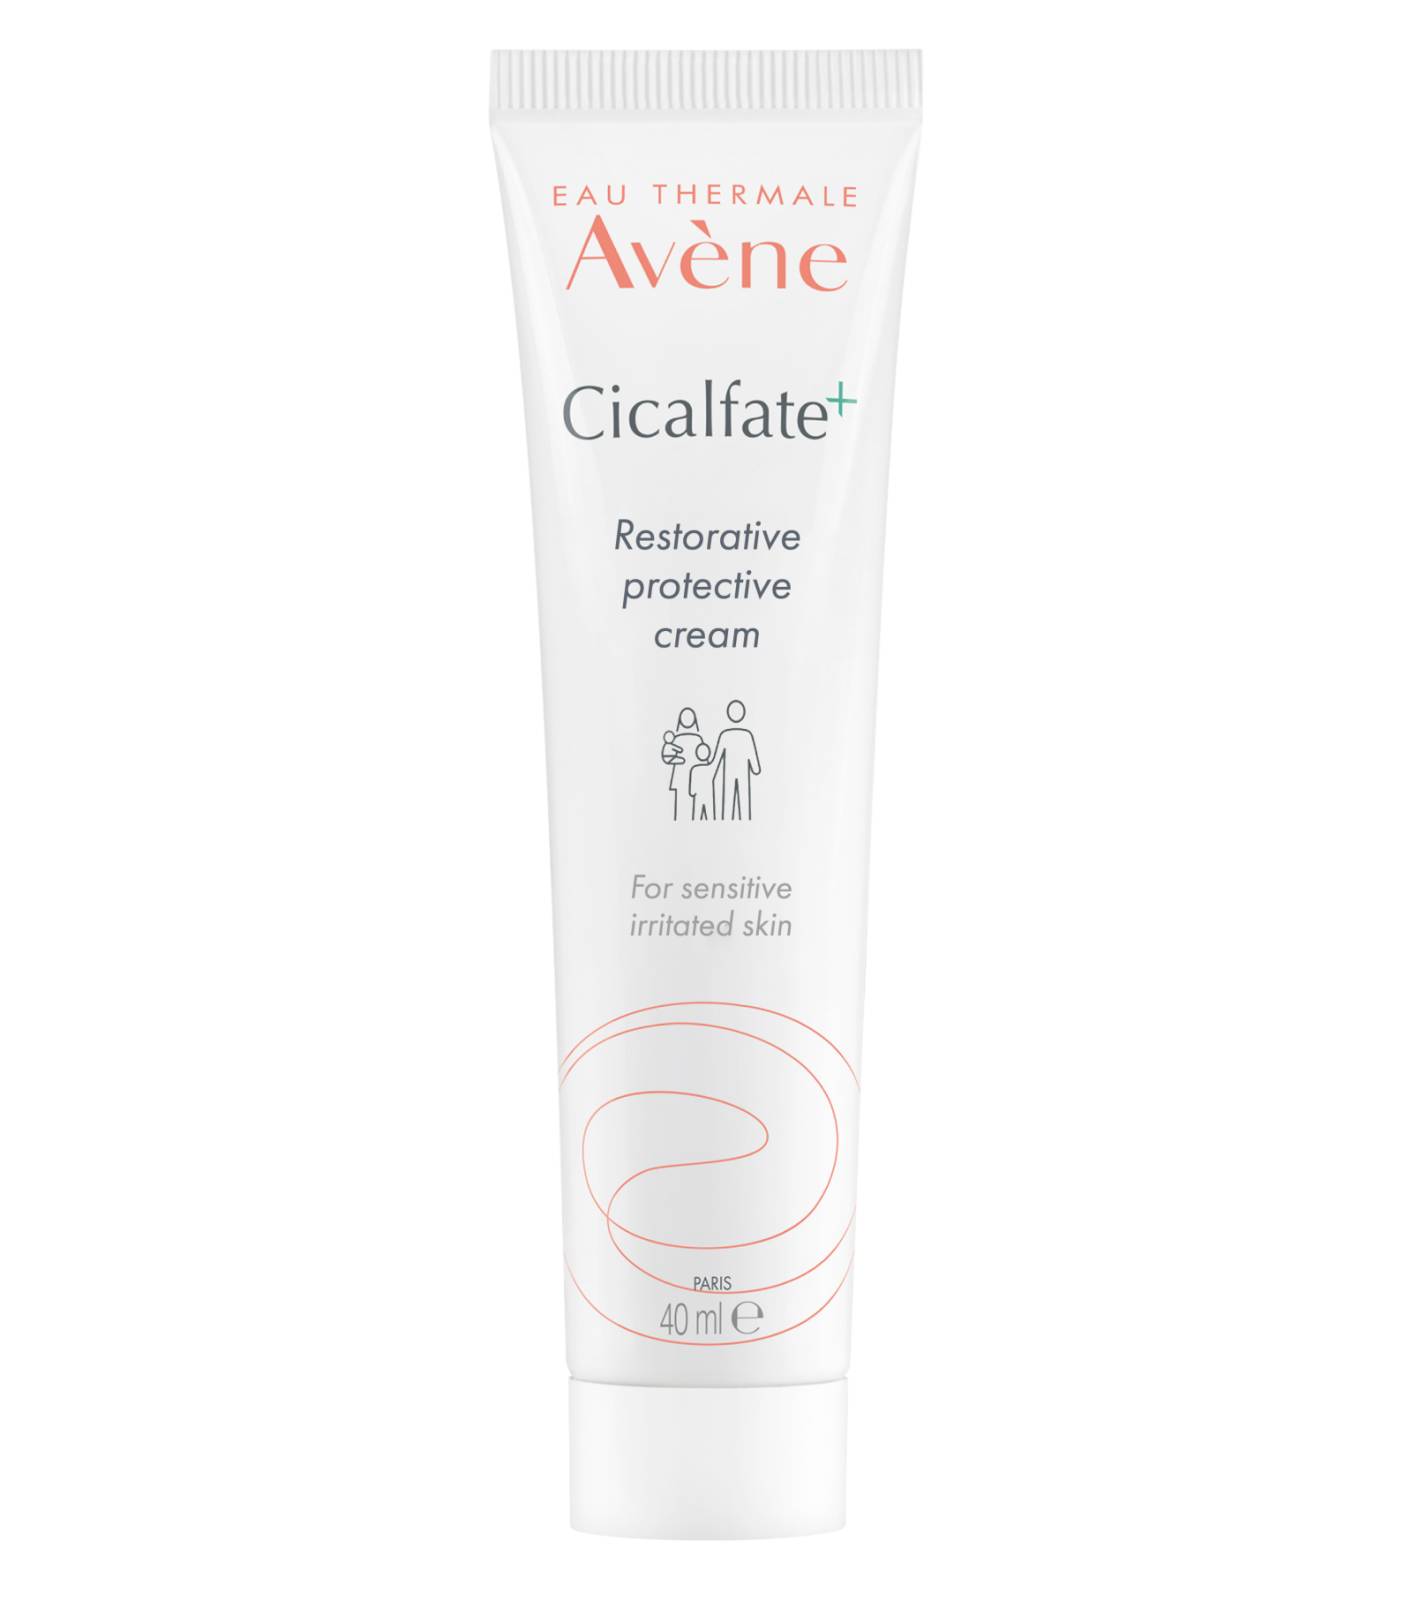 Eau Thermale Av�ne Cicalfate Restorative Protective Cream 40ml